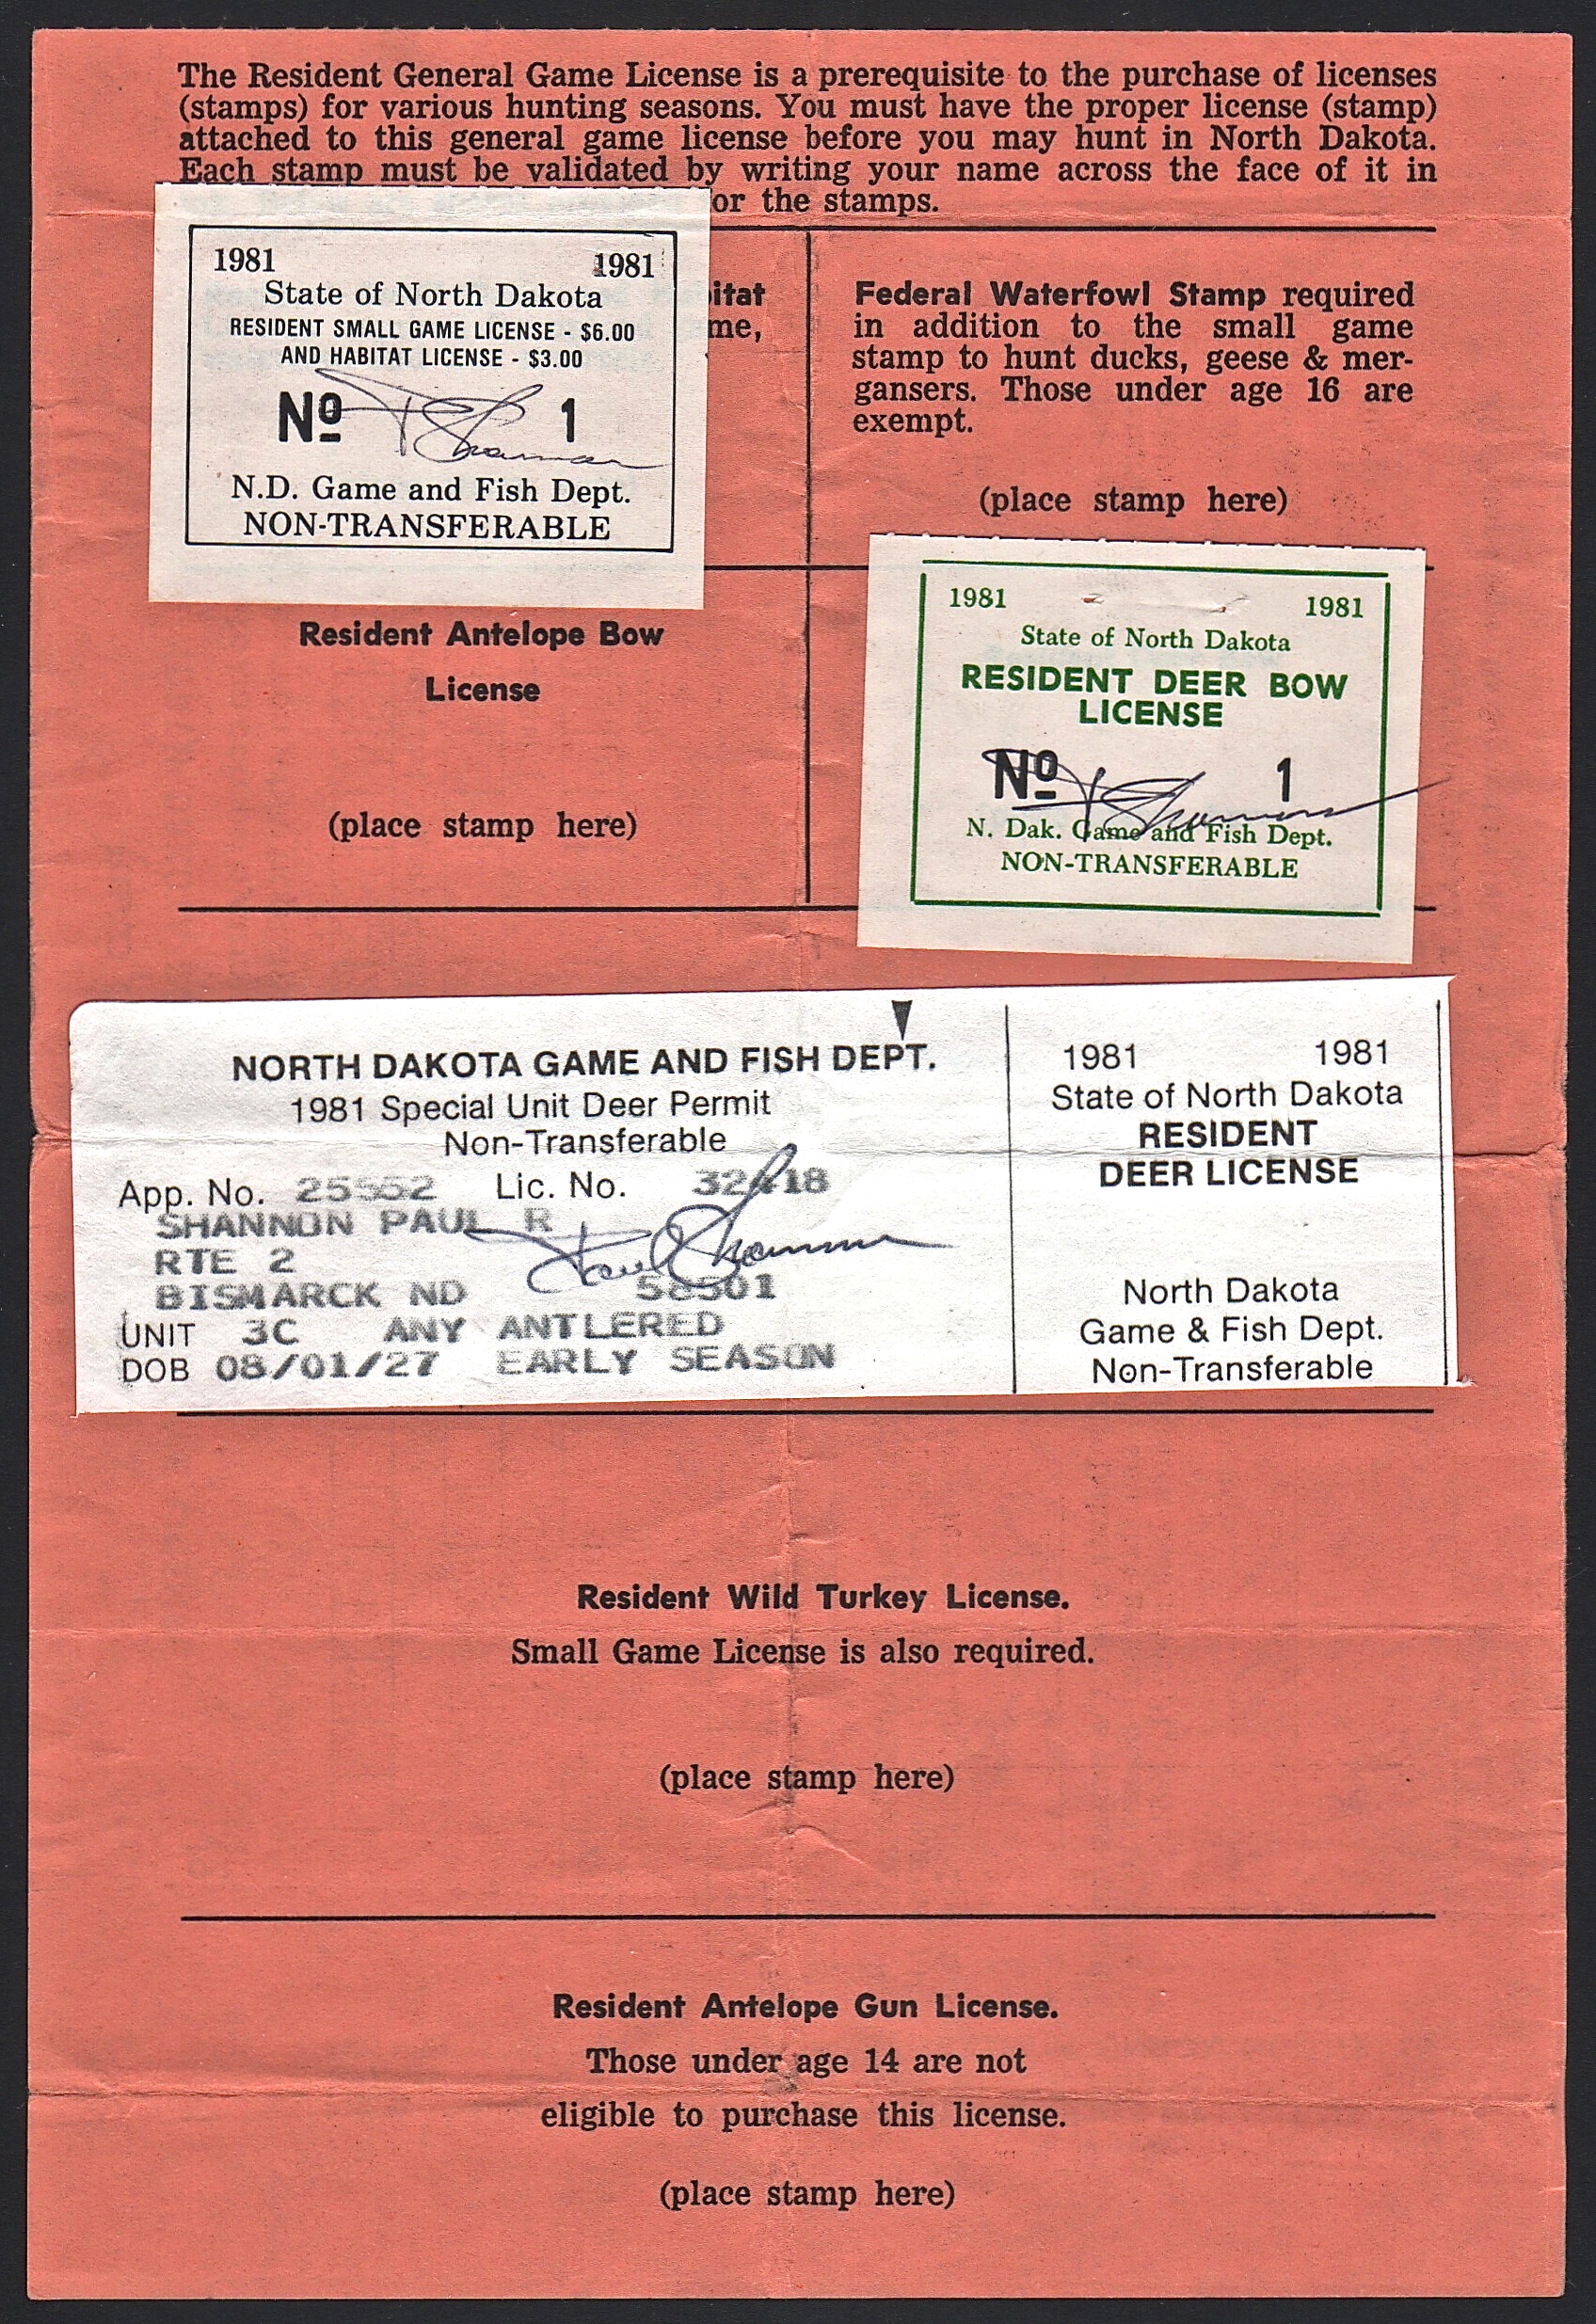 1981 North Dakota Deer #1 and Small Game #1 on License